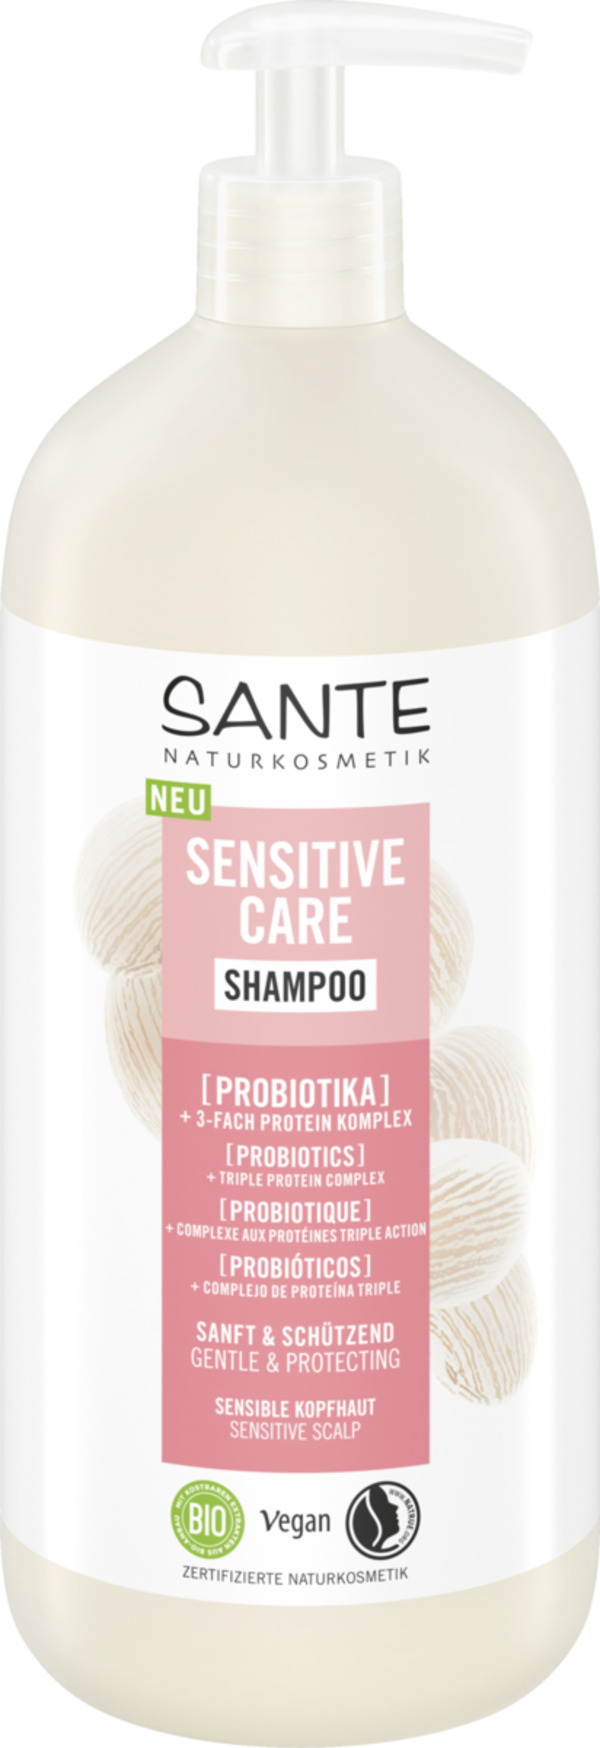 Bild 1 von Sante Sensitive Care Shampoo